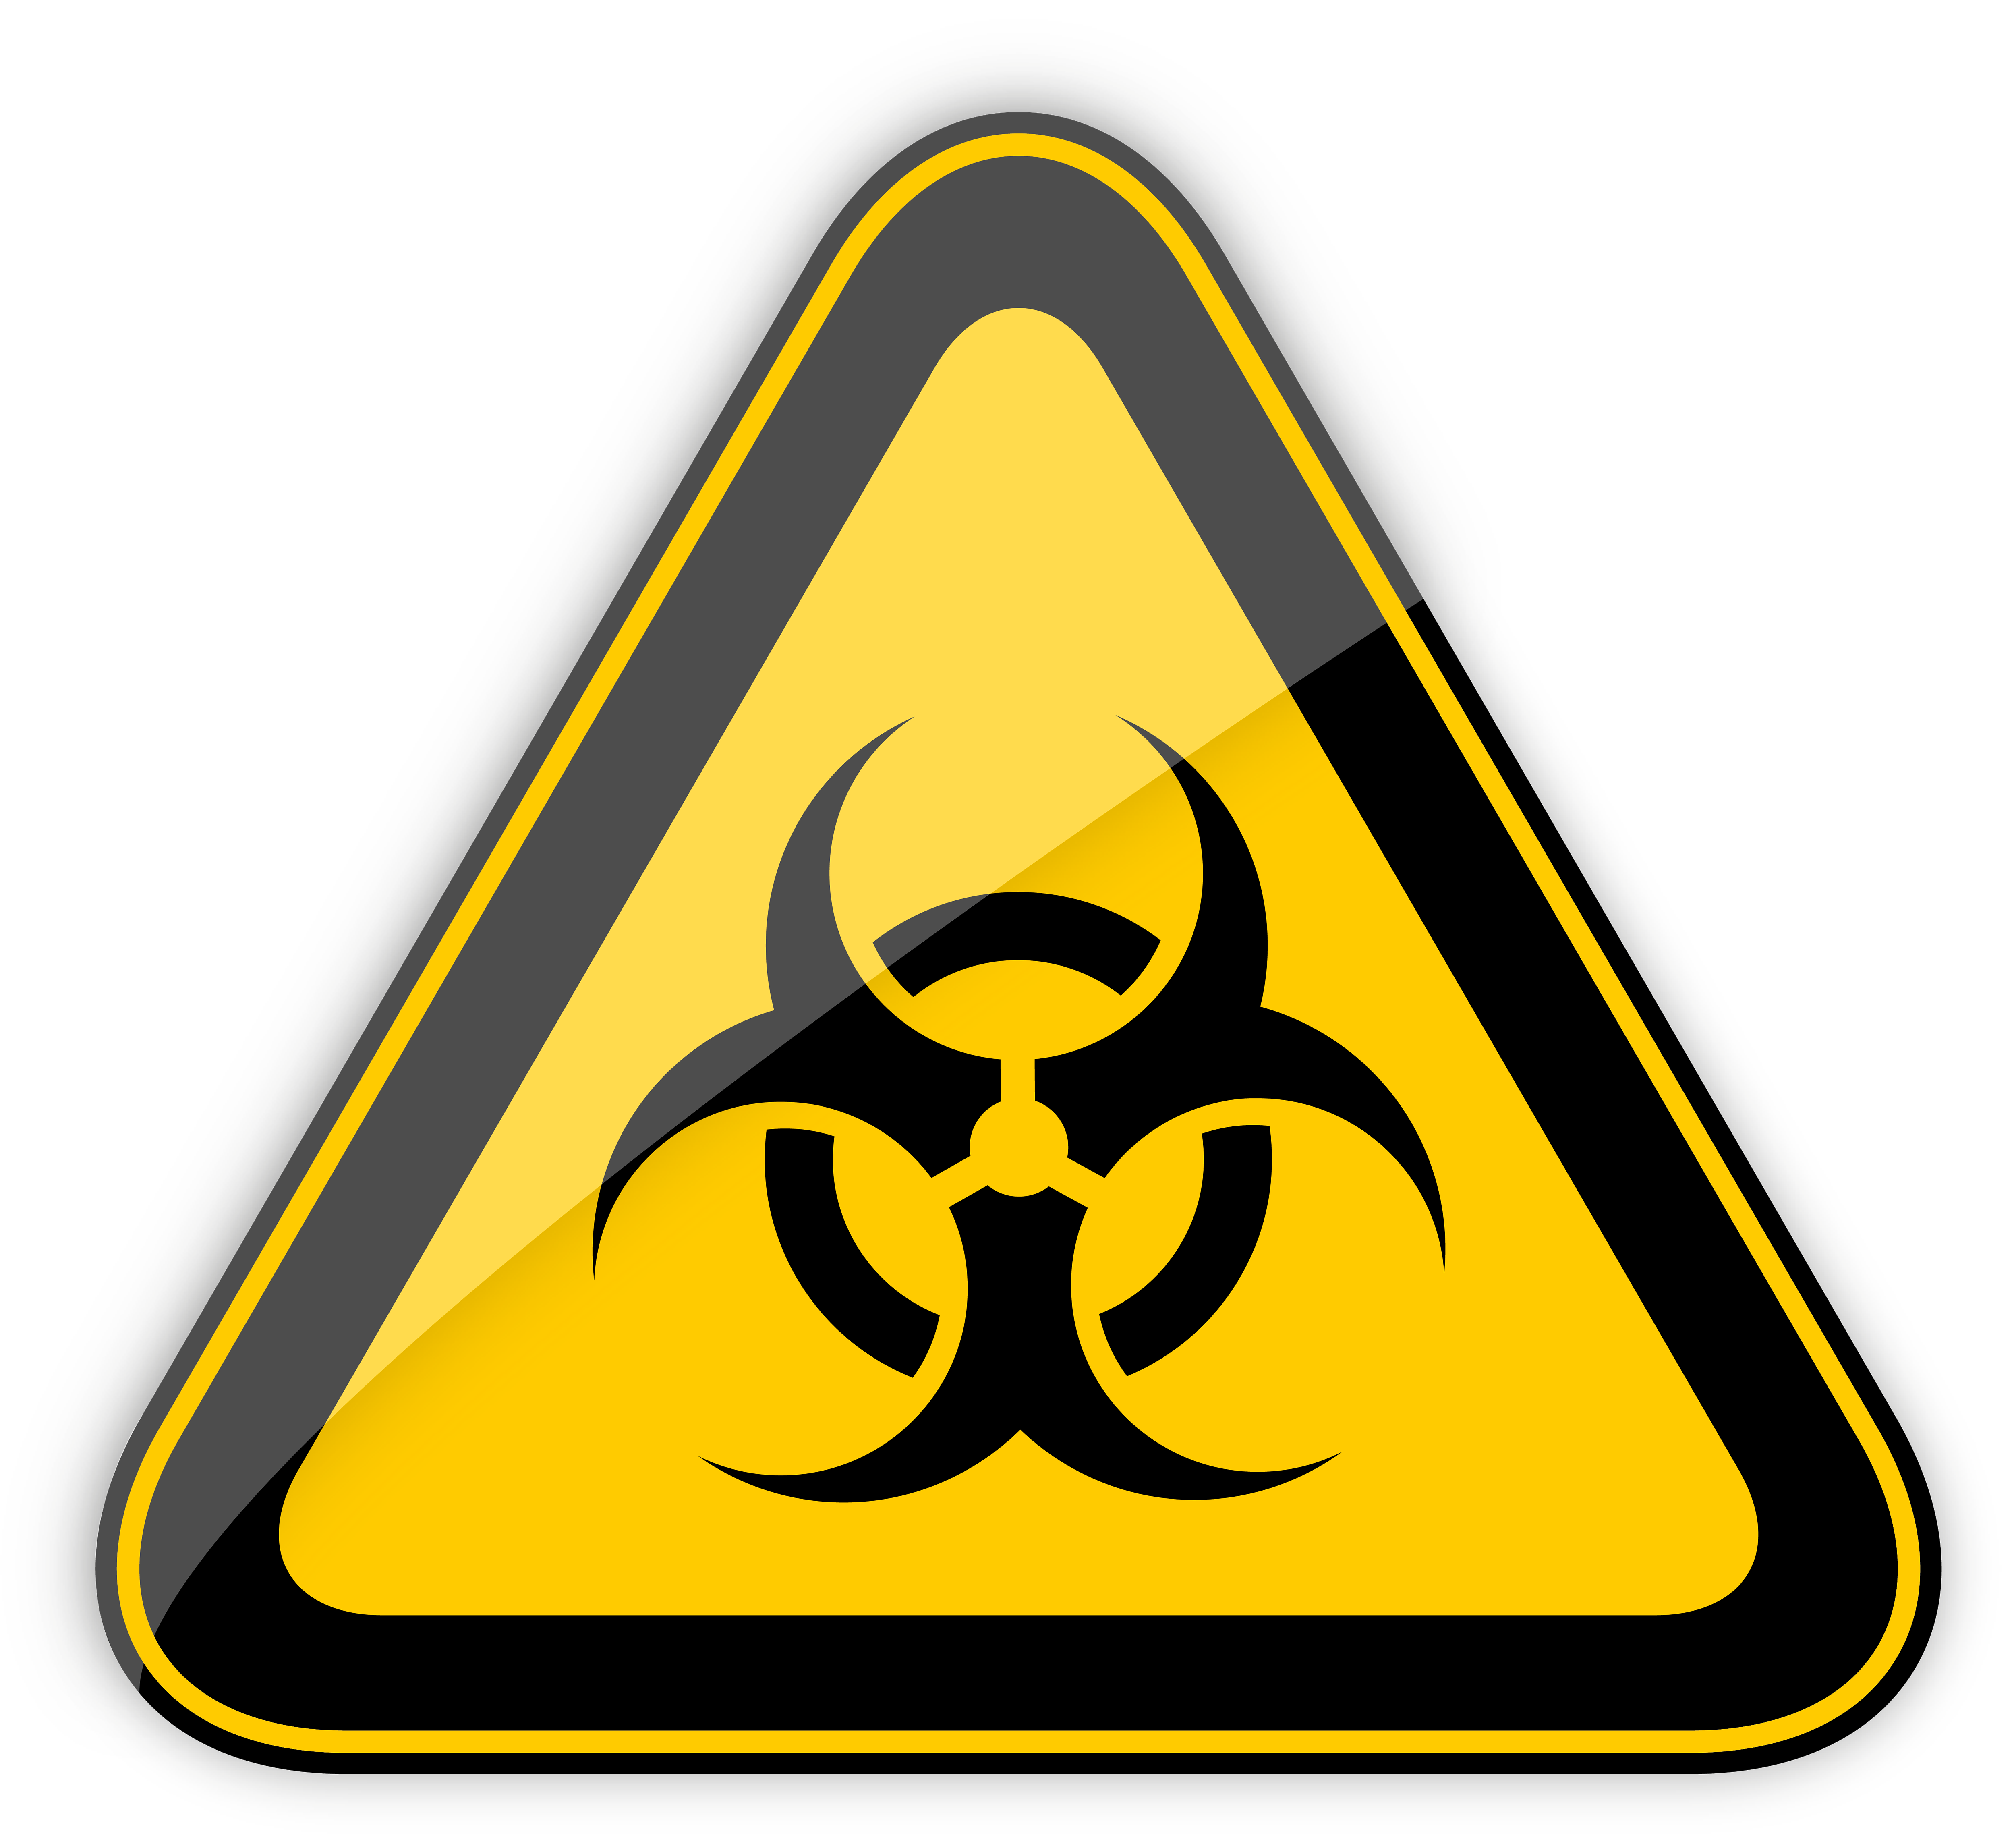 Biohazard Warning Sign PNG Clipart.